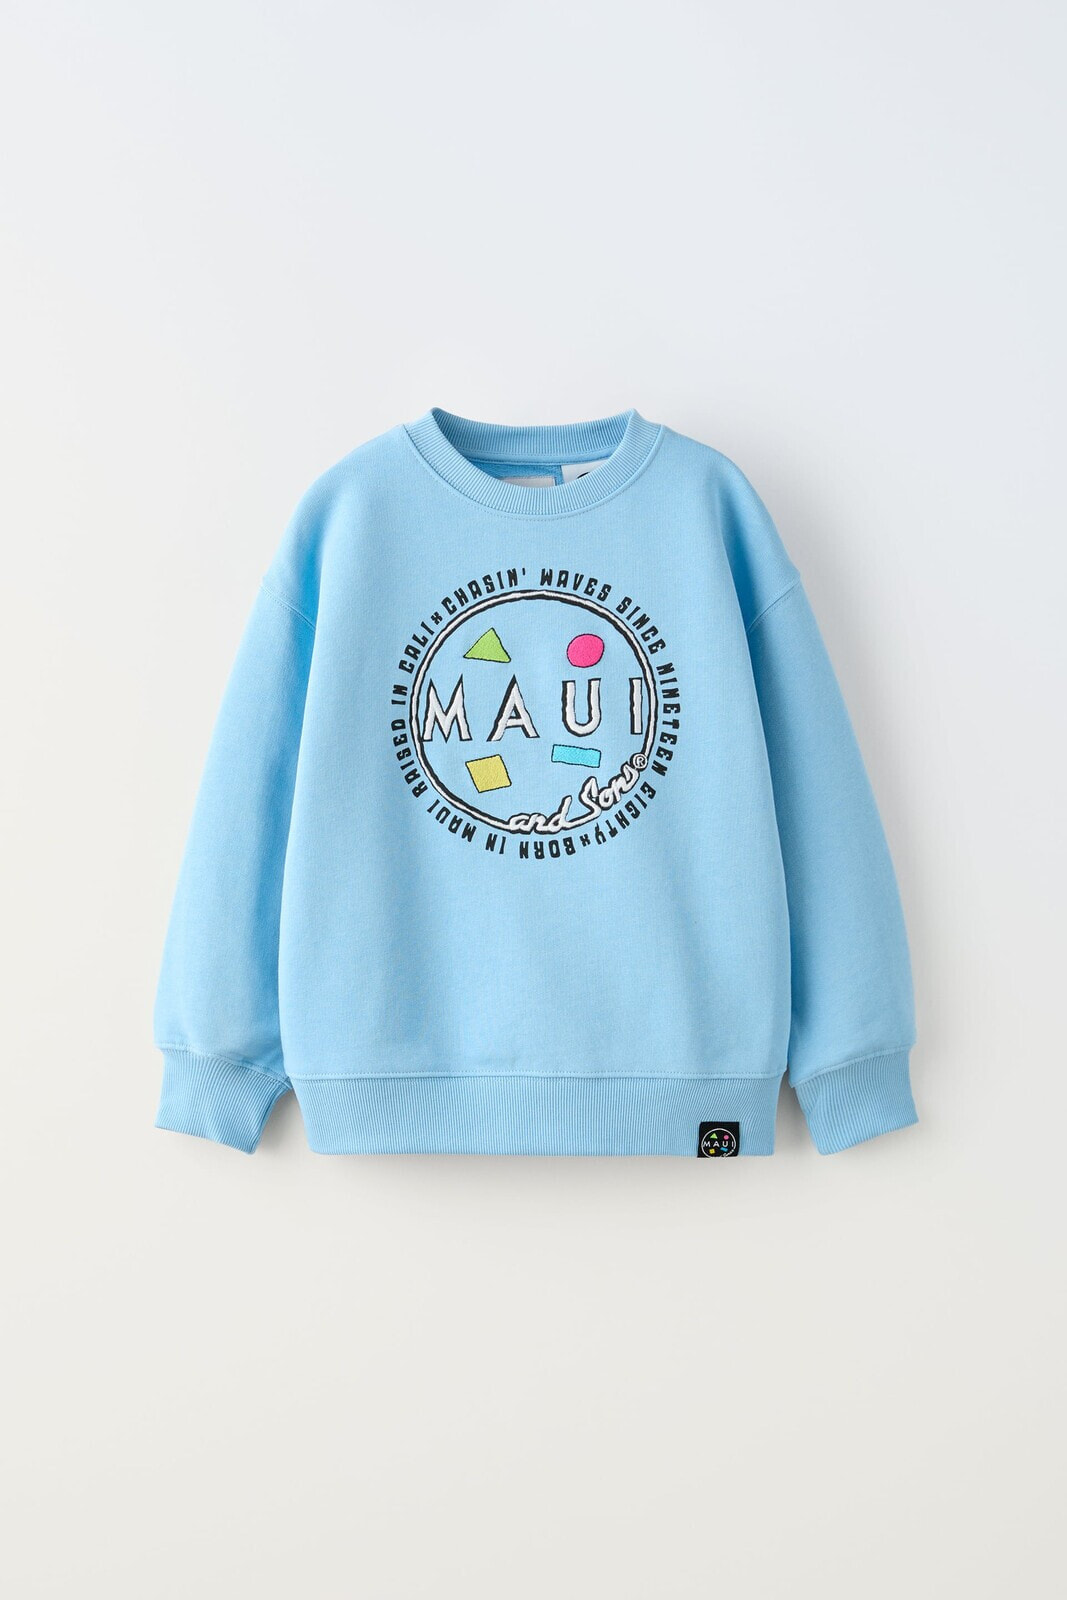 Maui & sons ® sweatshirt